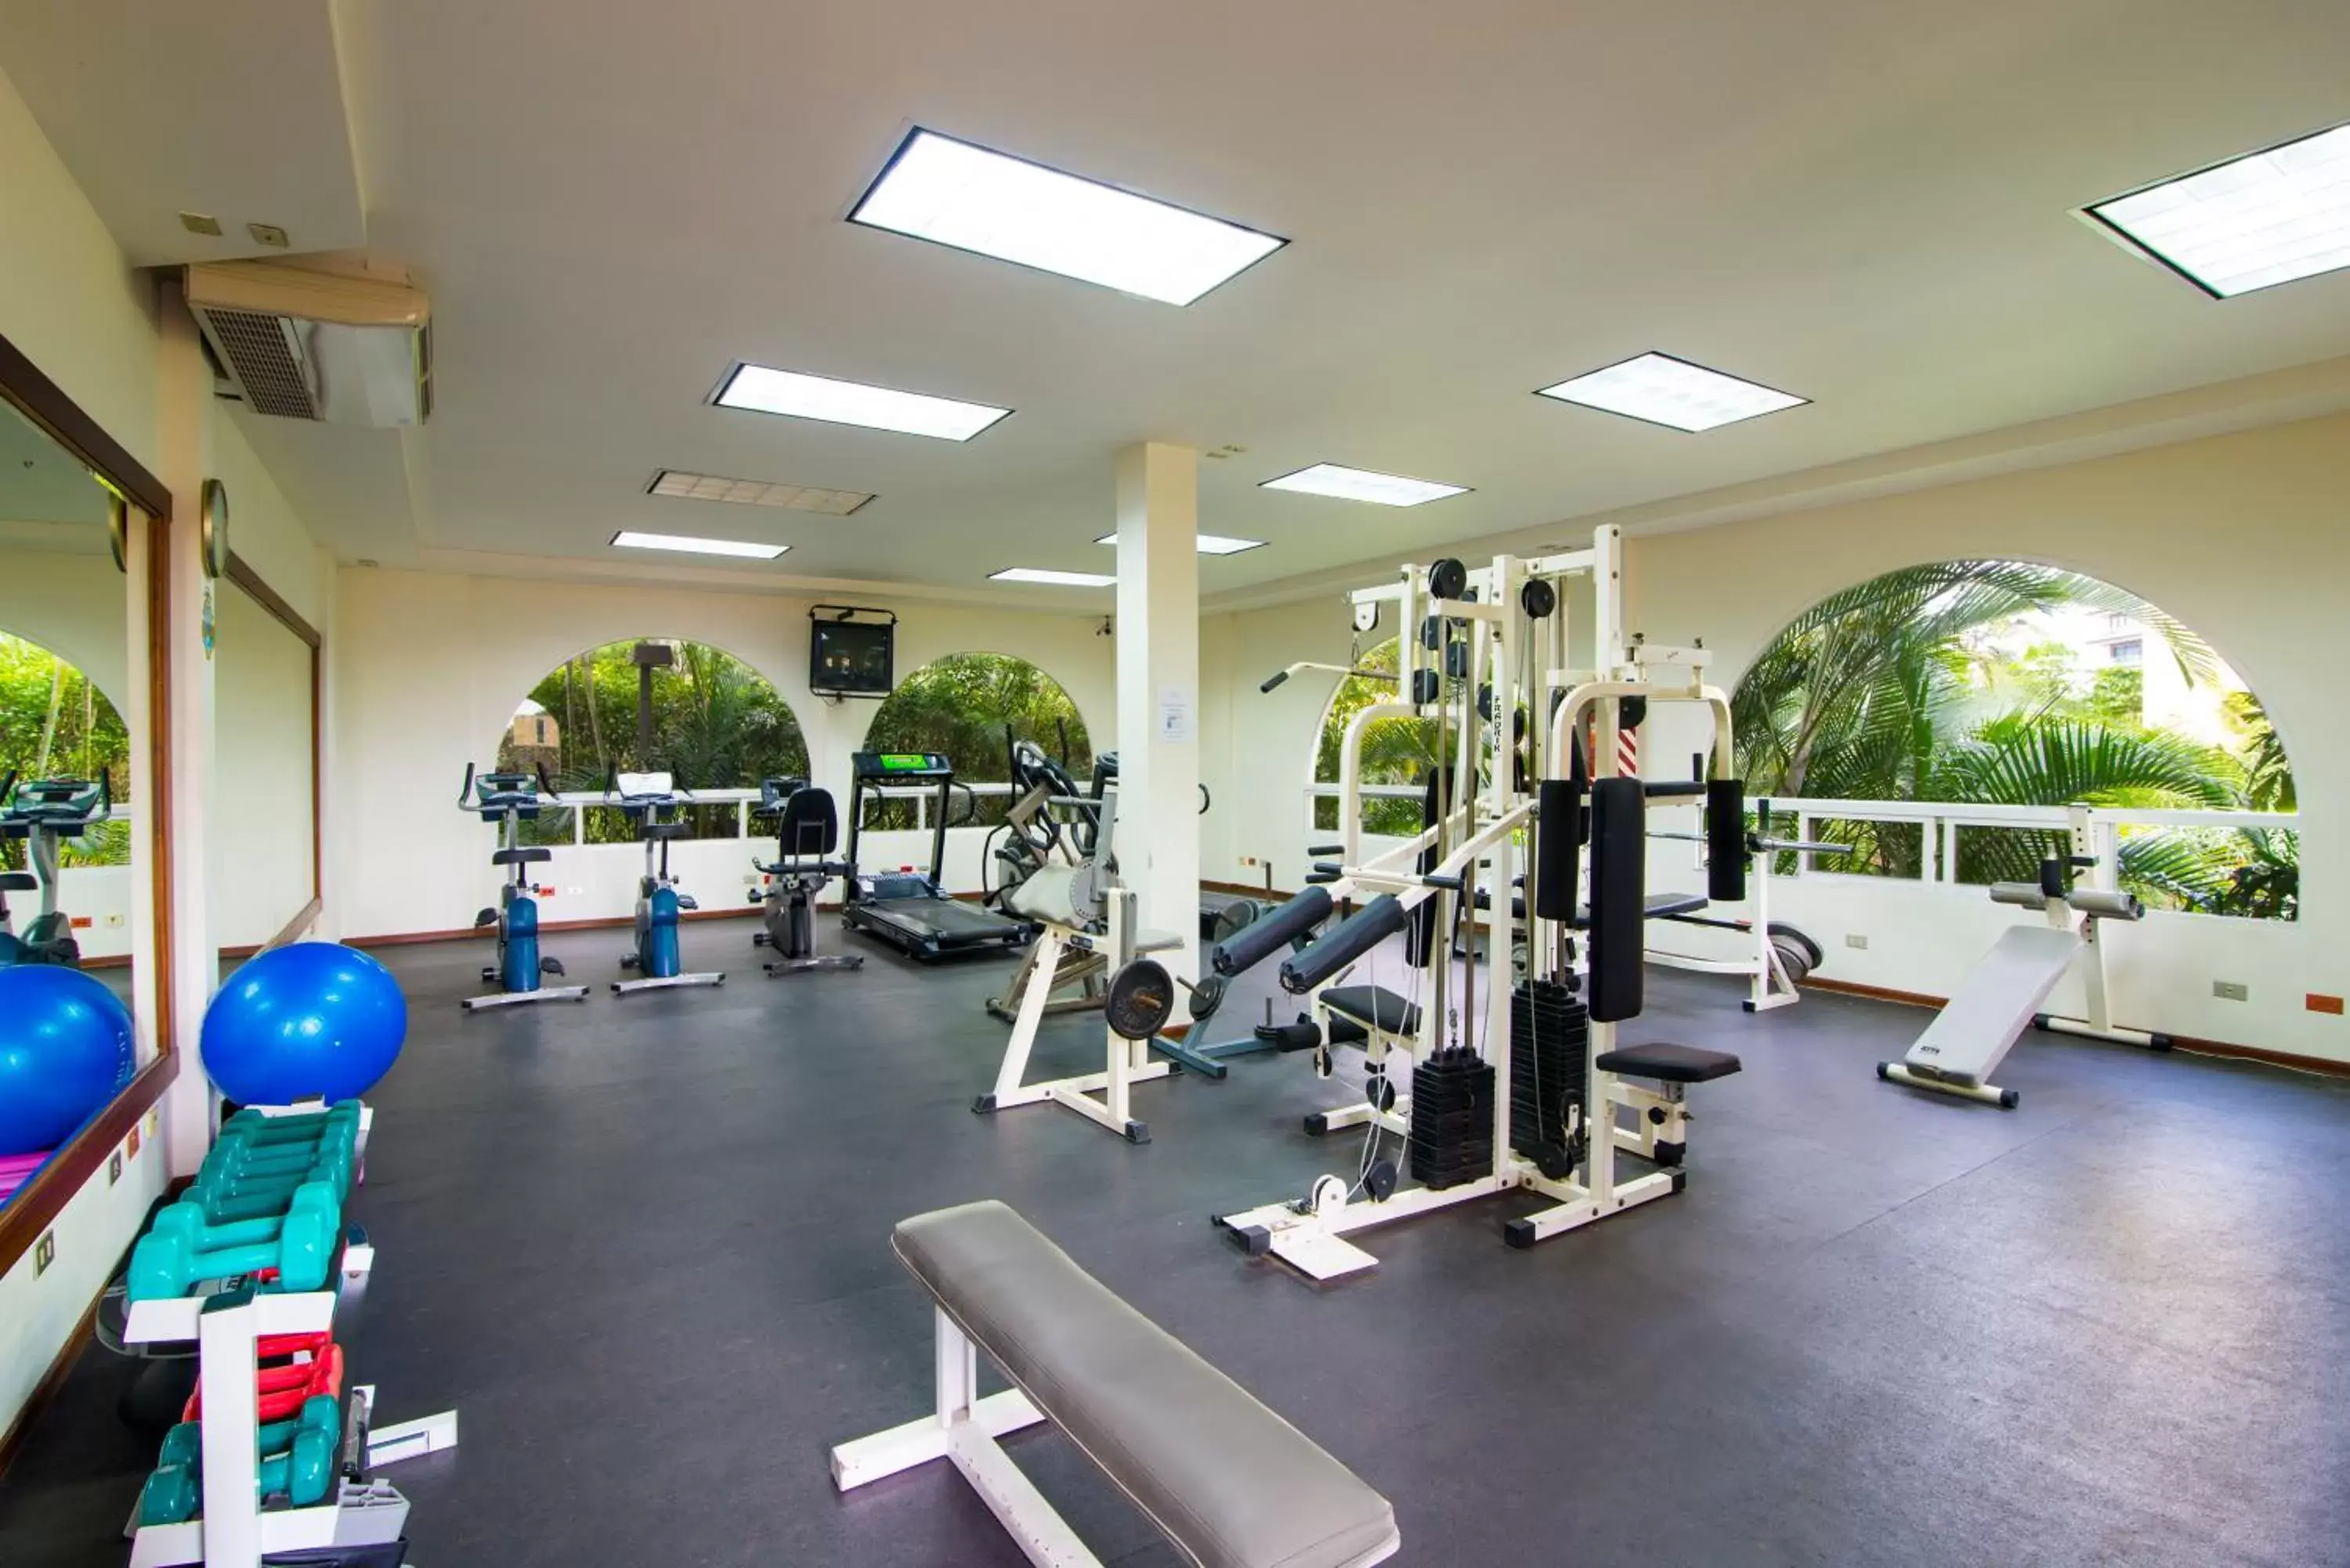 Fitness centre/facilities, Fitness Center/Facilities in Apartotel & Suites Villas del Rio